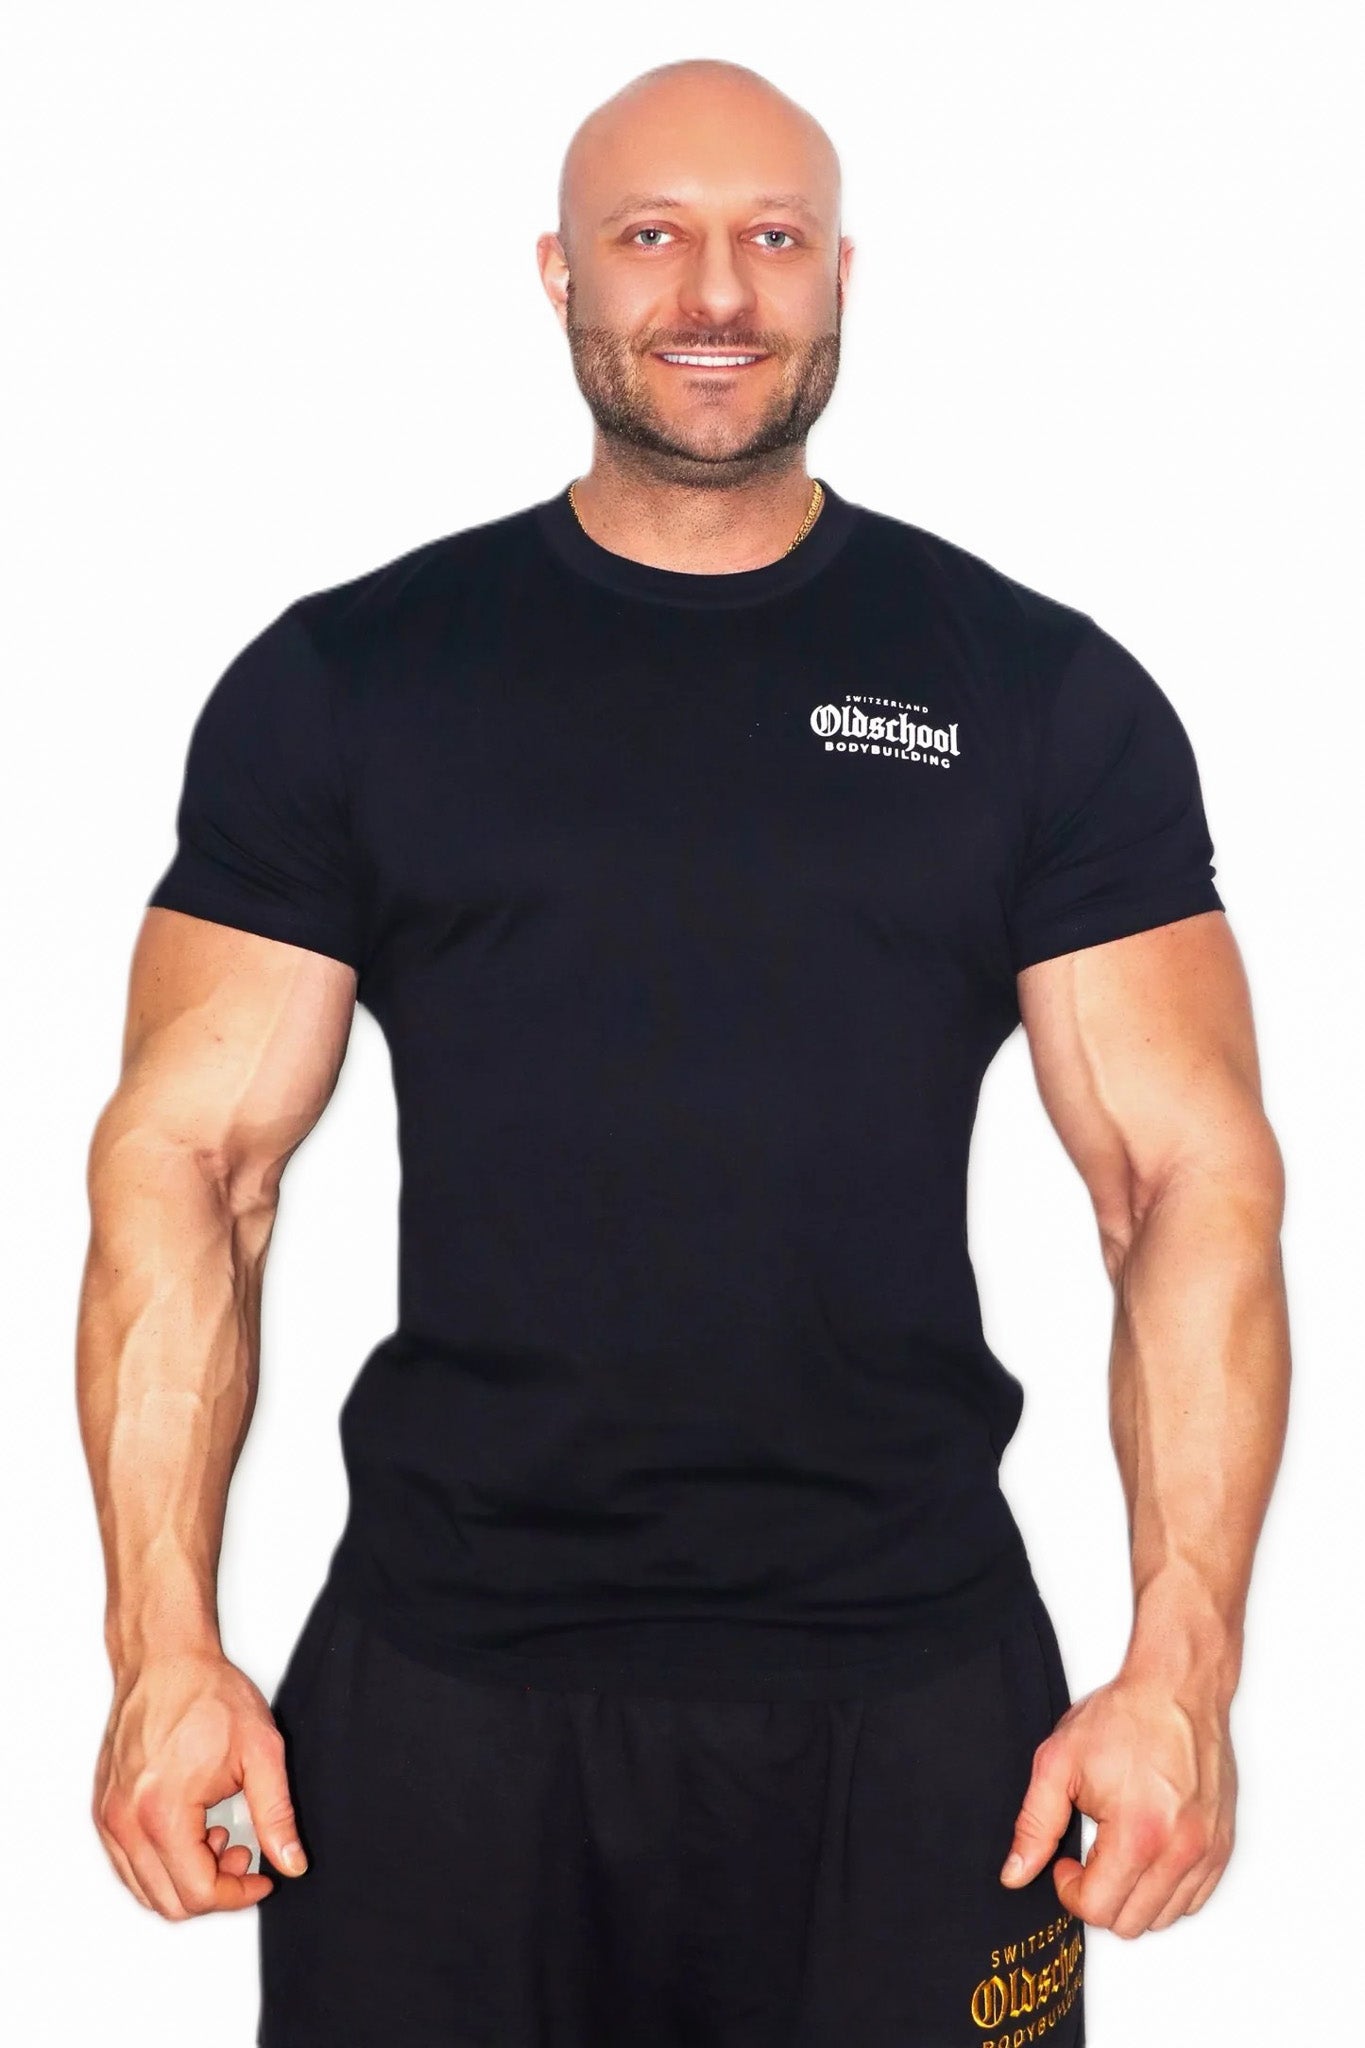 Oldschool Bodybuilding Switzerland Classic T-Shirt - Schwarz